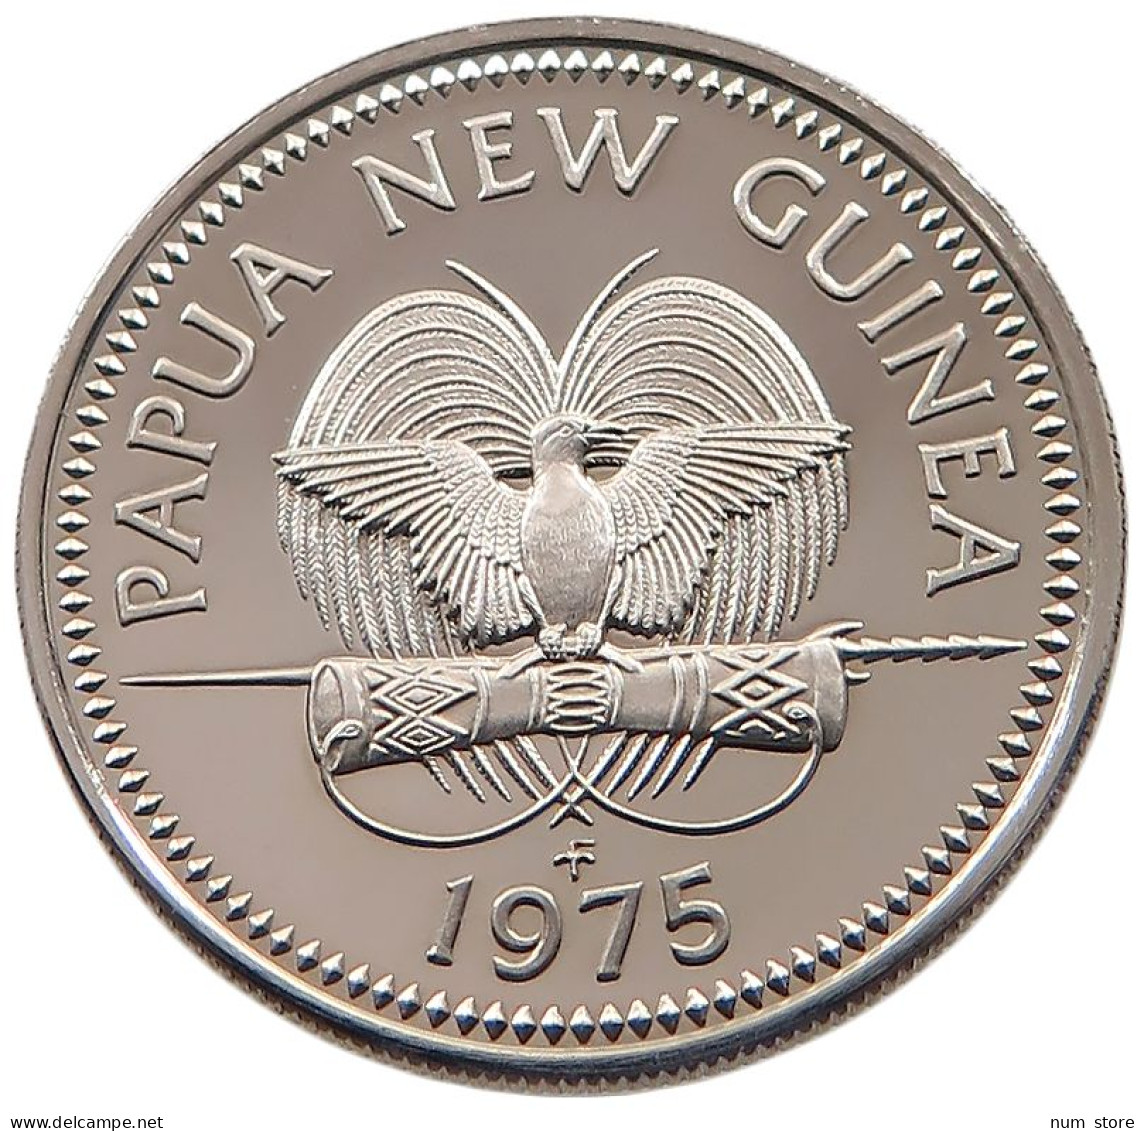 NEW GUINEA 10 TOEA 1975  #alb061 0253 - Papoea-Nieuw-Guinea